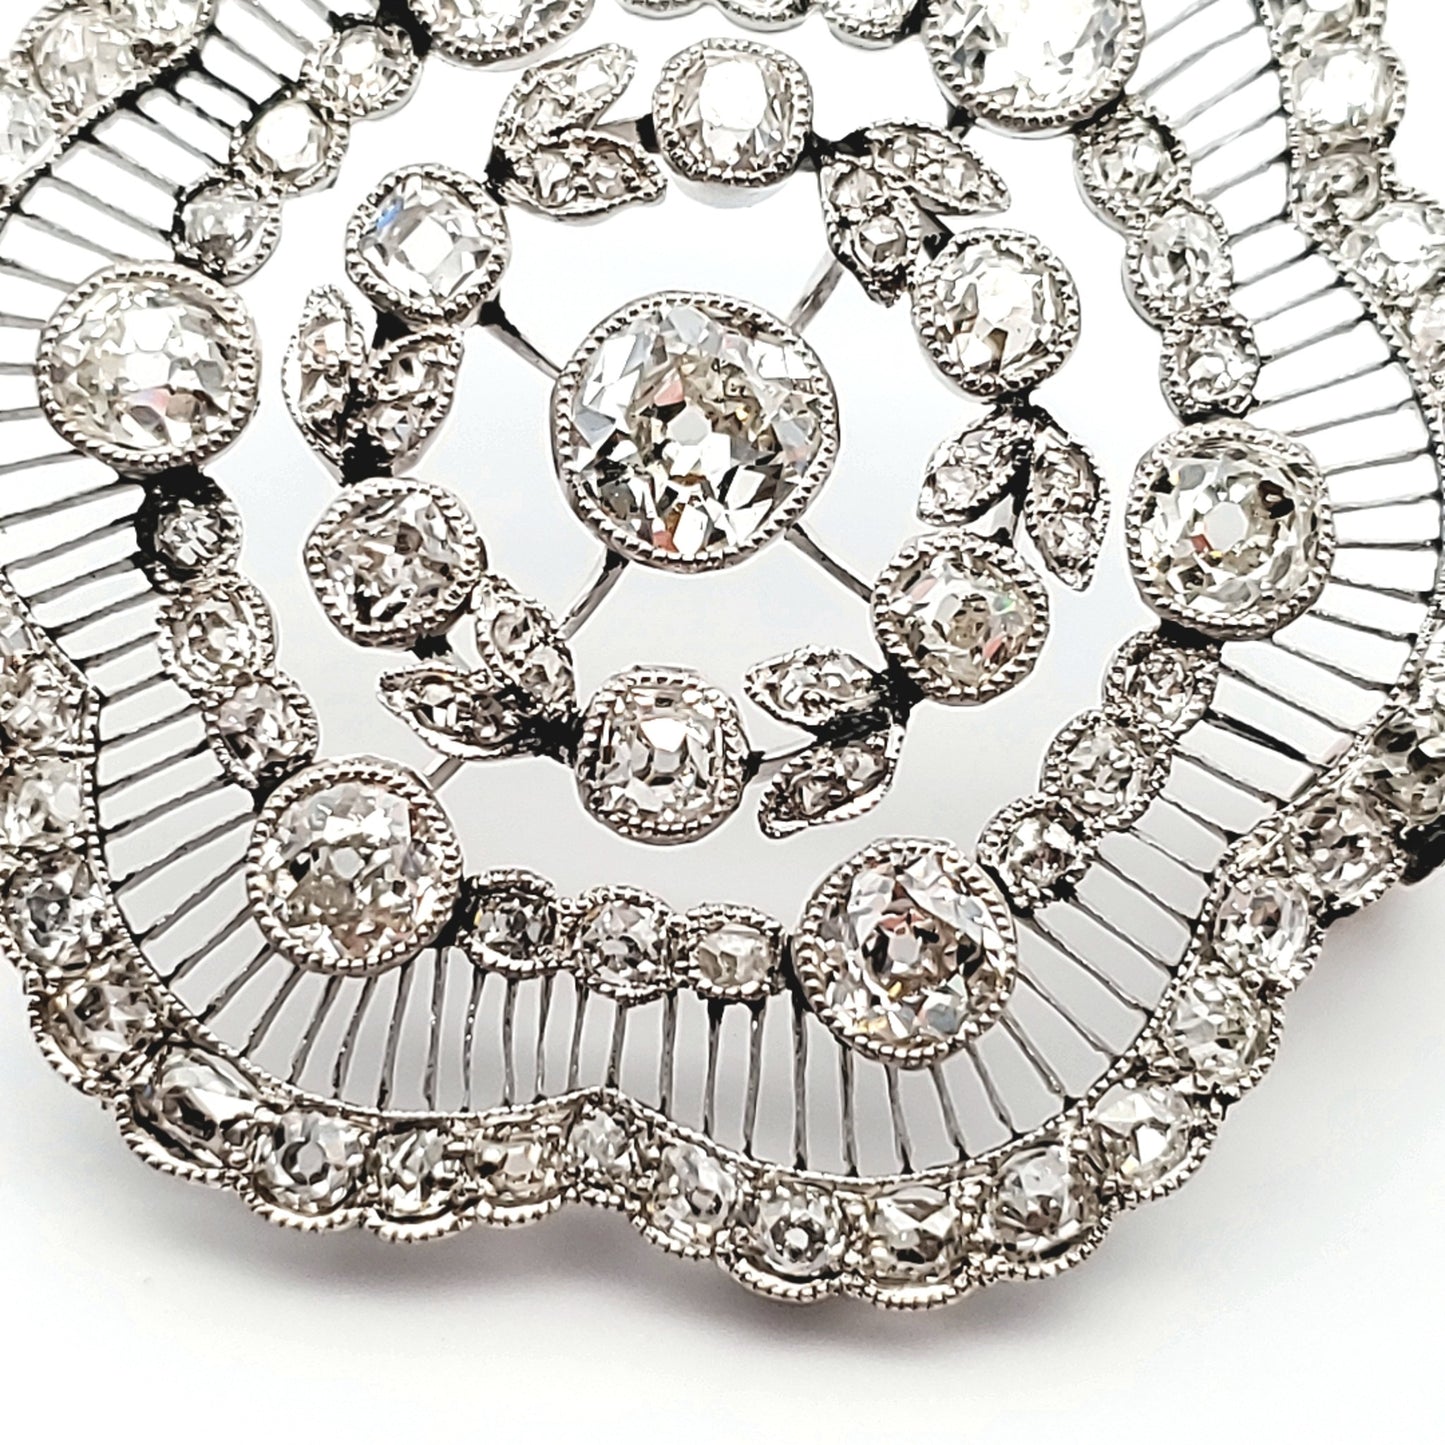 Art Deco Platinum Diamond Brooch close-up details